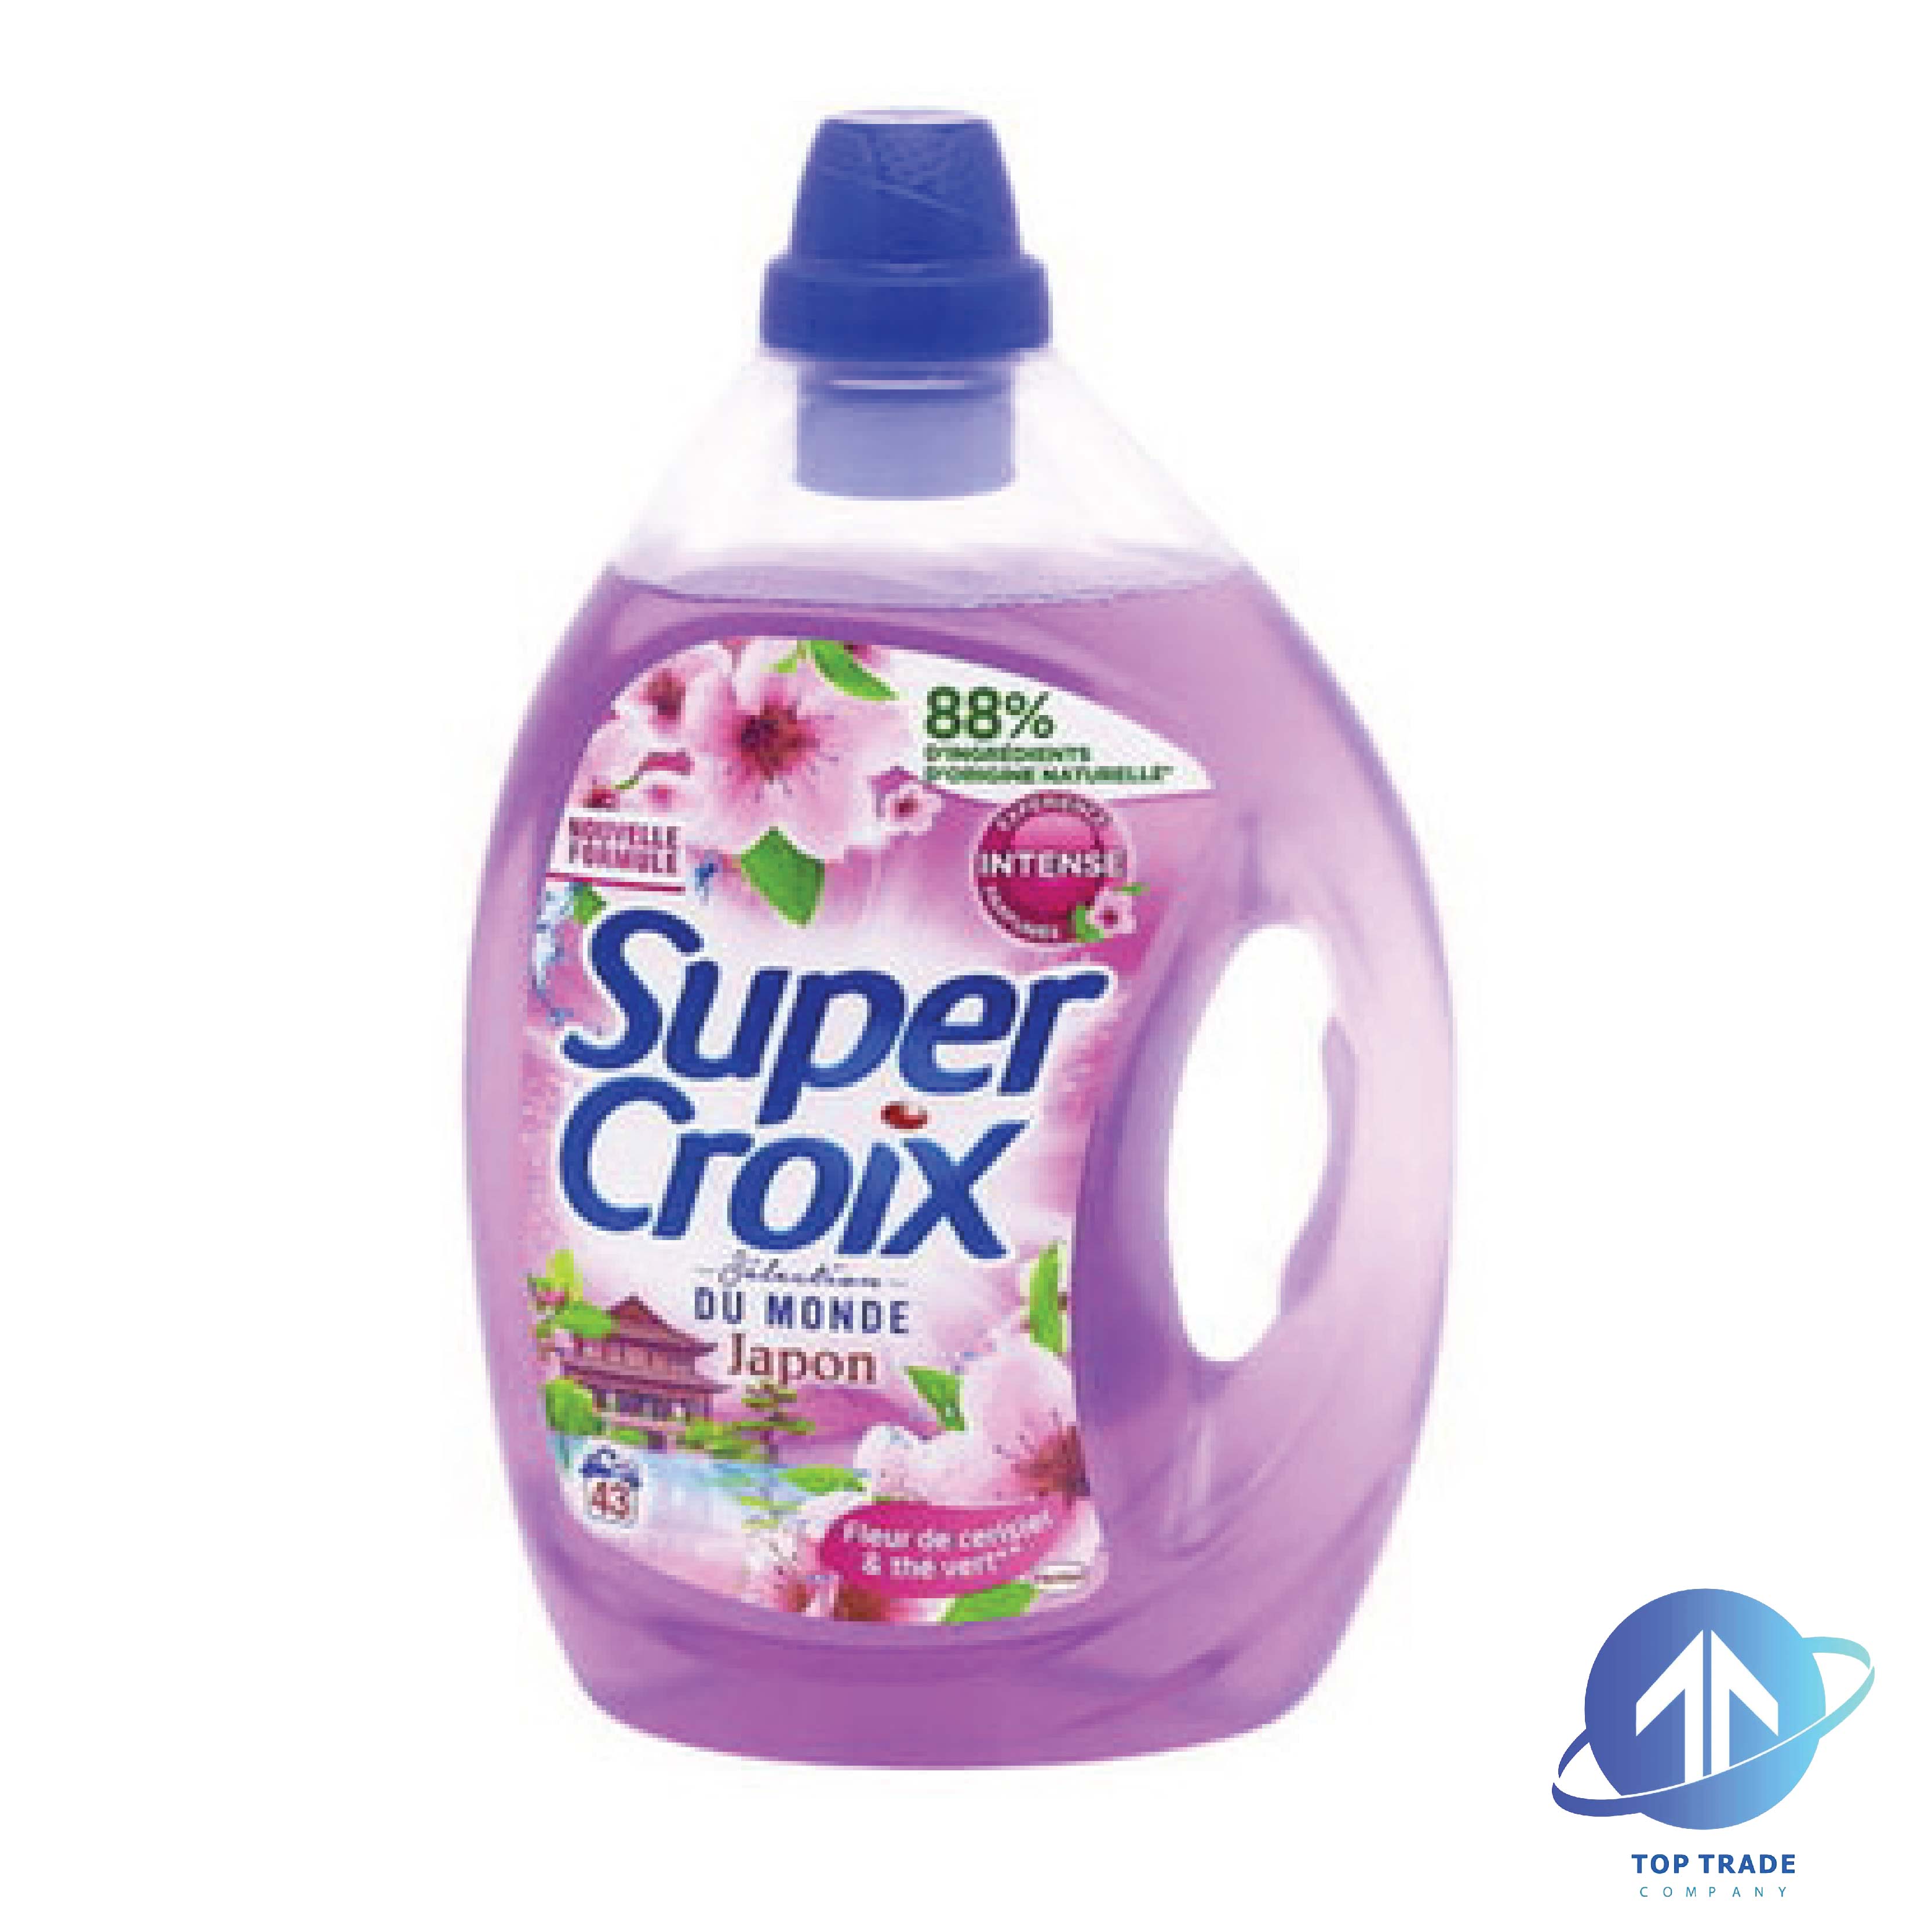 Super Croix washing liquid Aromatic Therapy Japan 2,15l/43sc